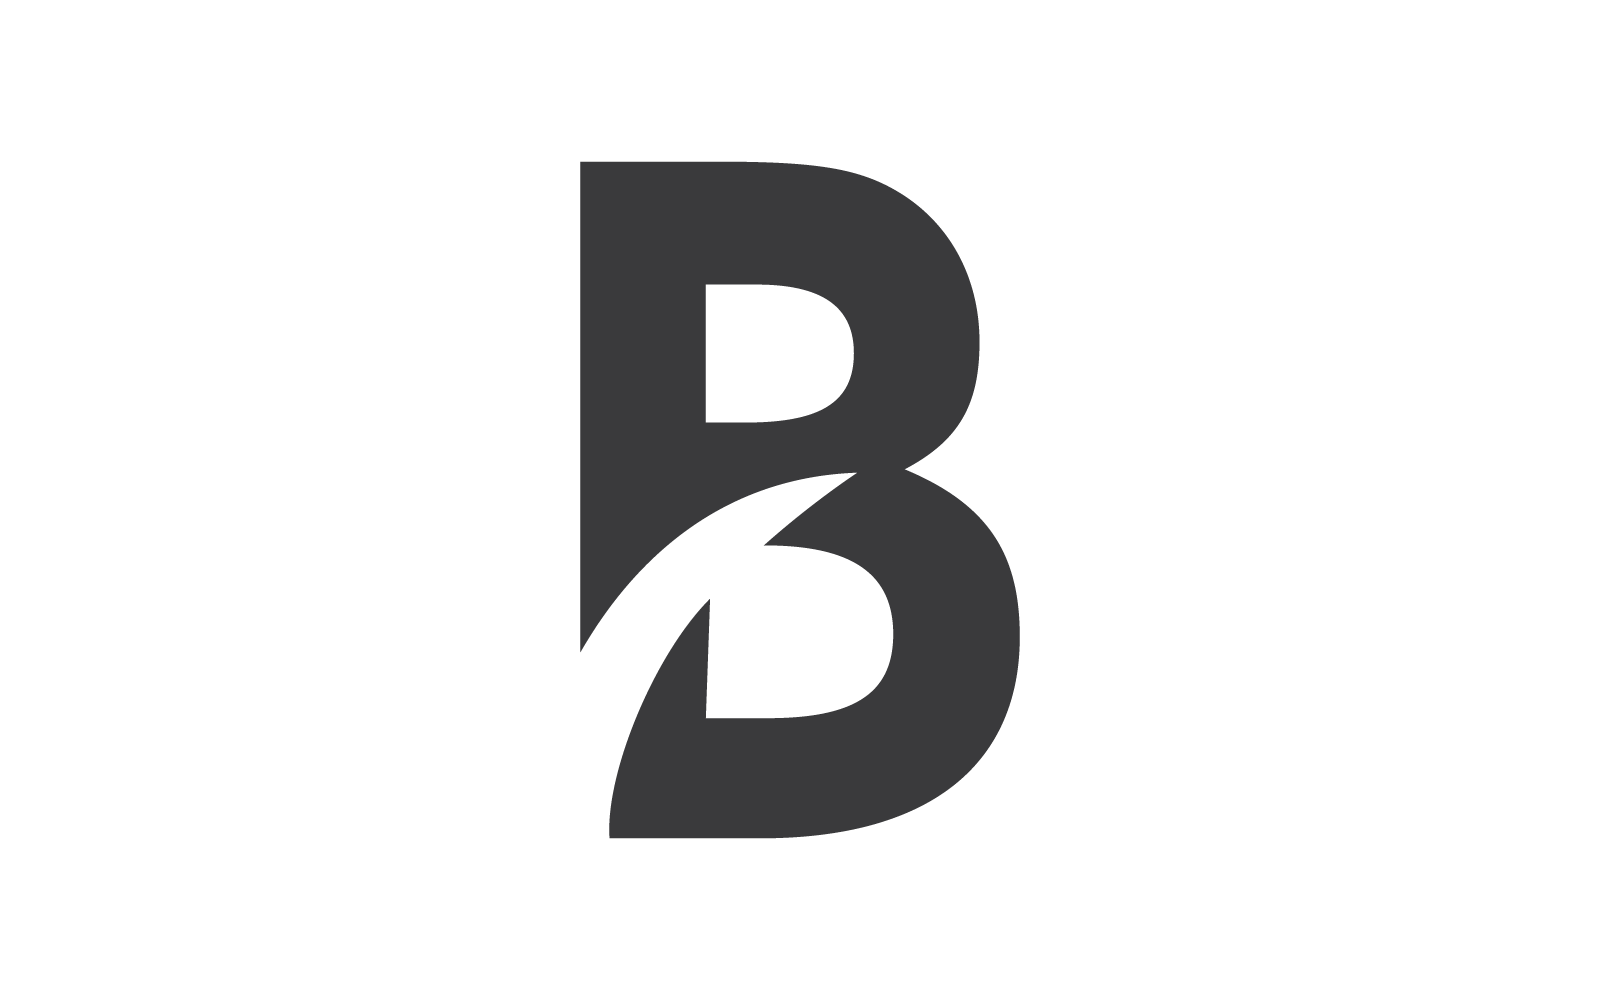 Modern B Initial, letter, alphabet font logo vector design